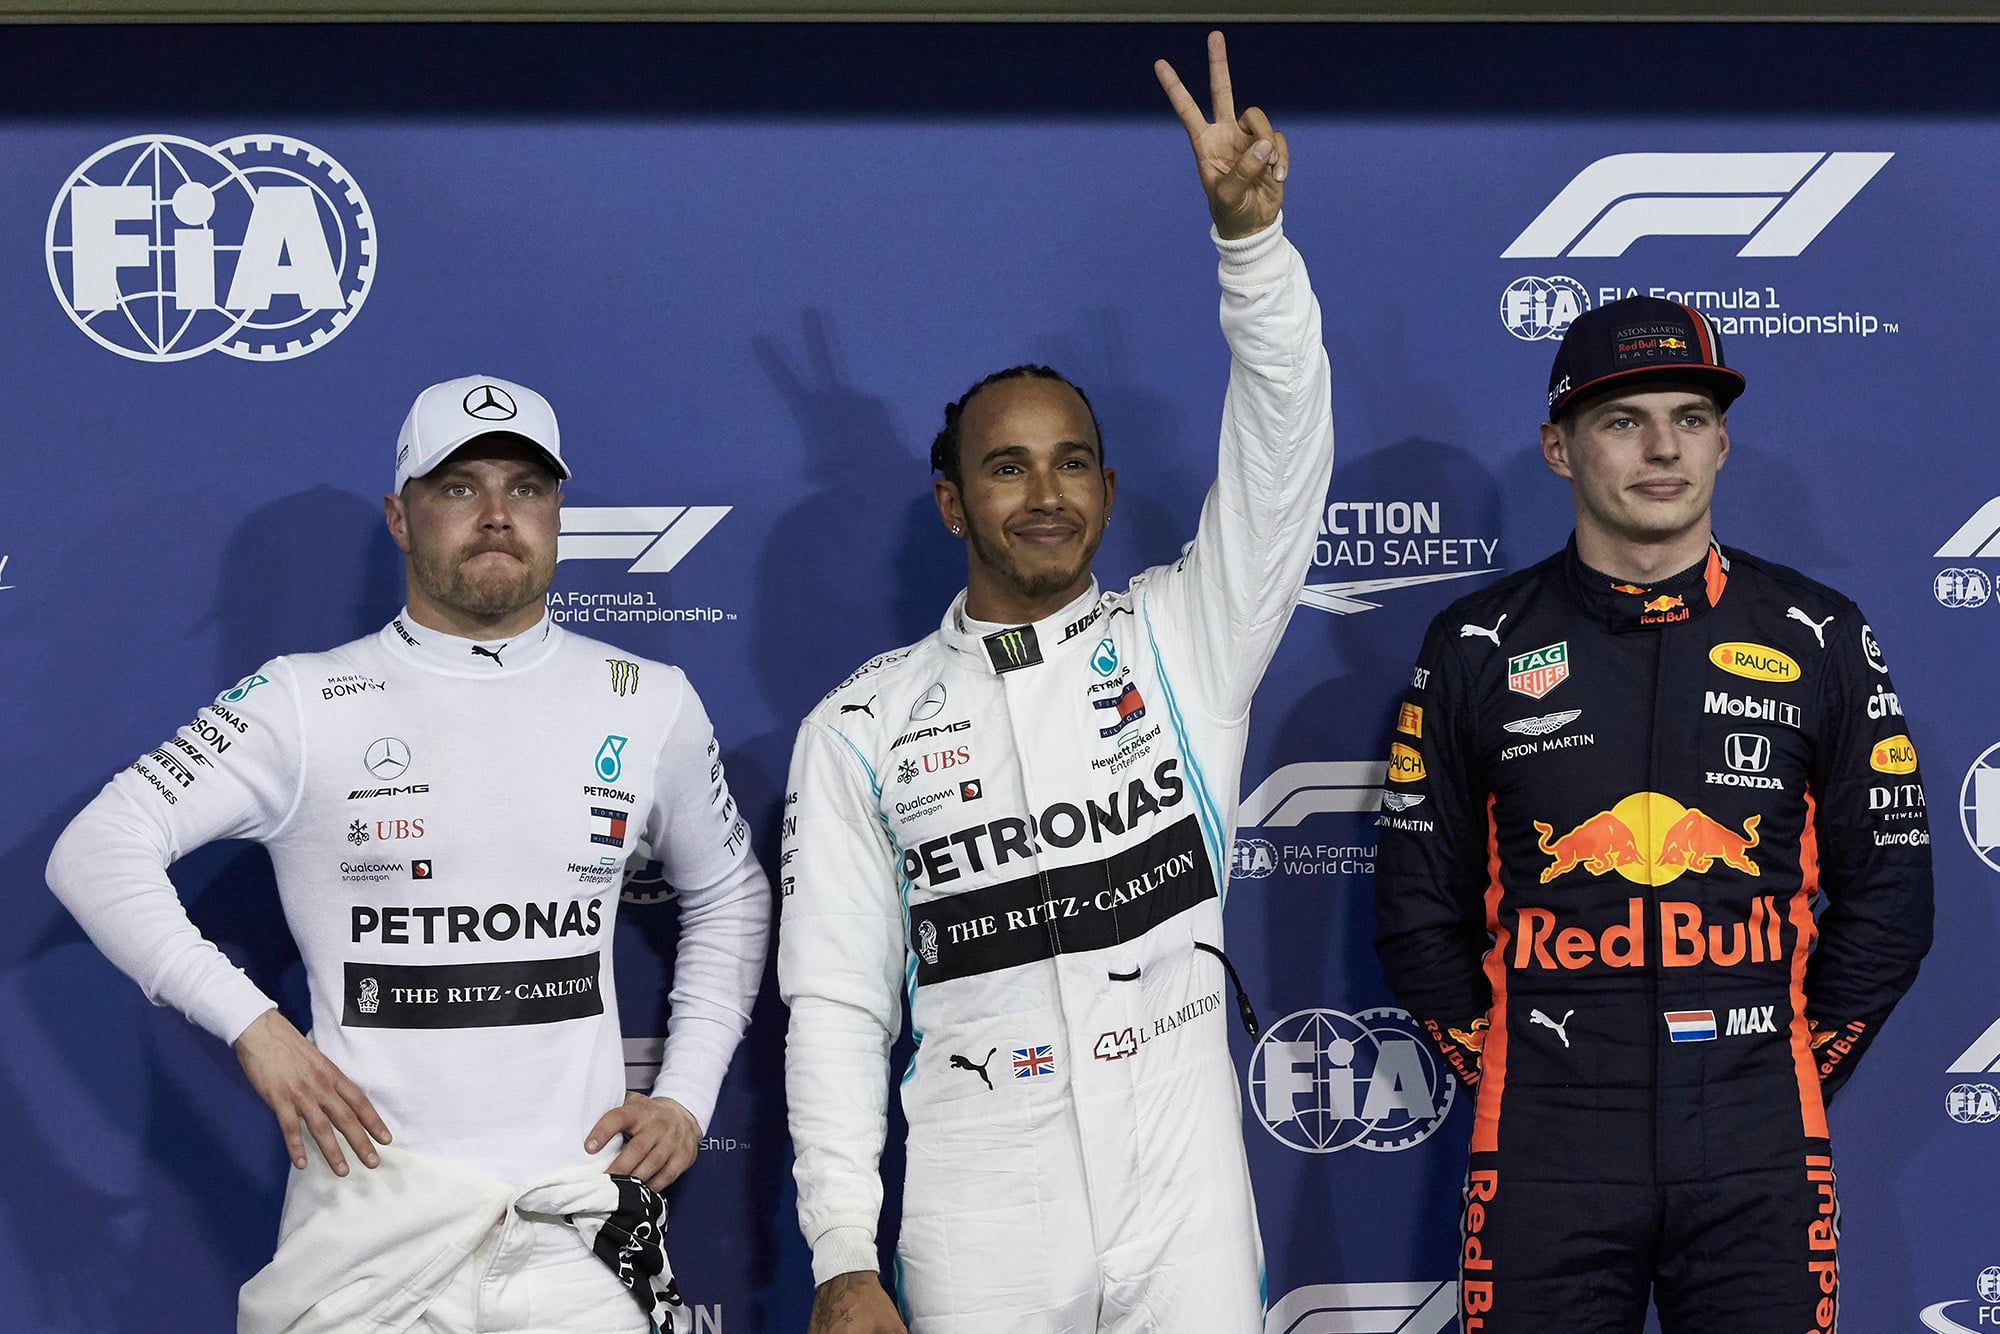 Hamilton, Bottas and Verstappen: top 3 qualifiers at the 2019 F1 Abu Dhabi Grand Prix